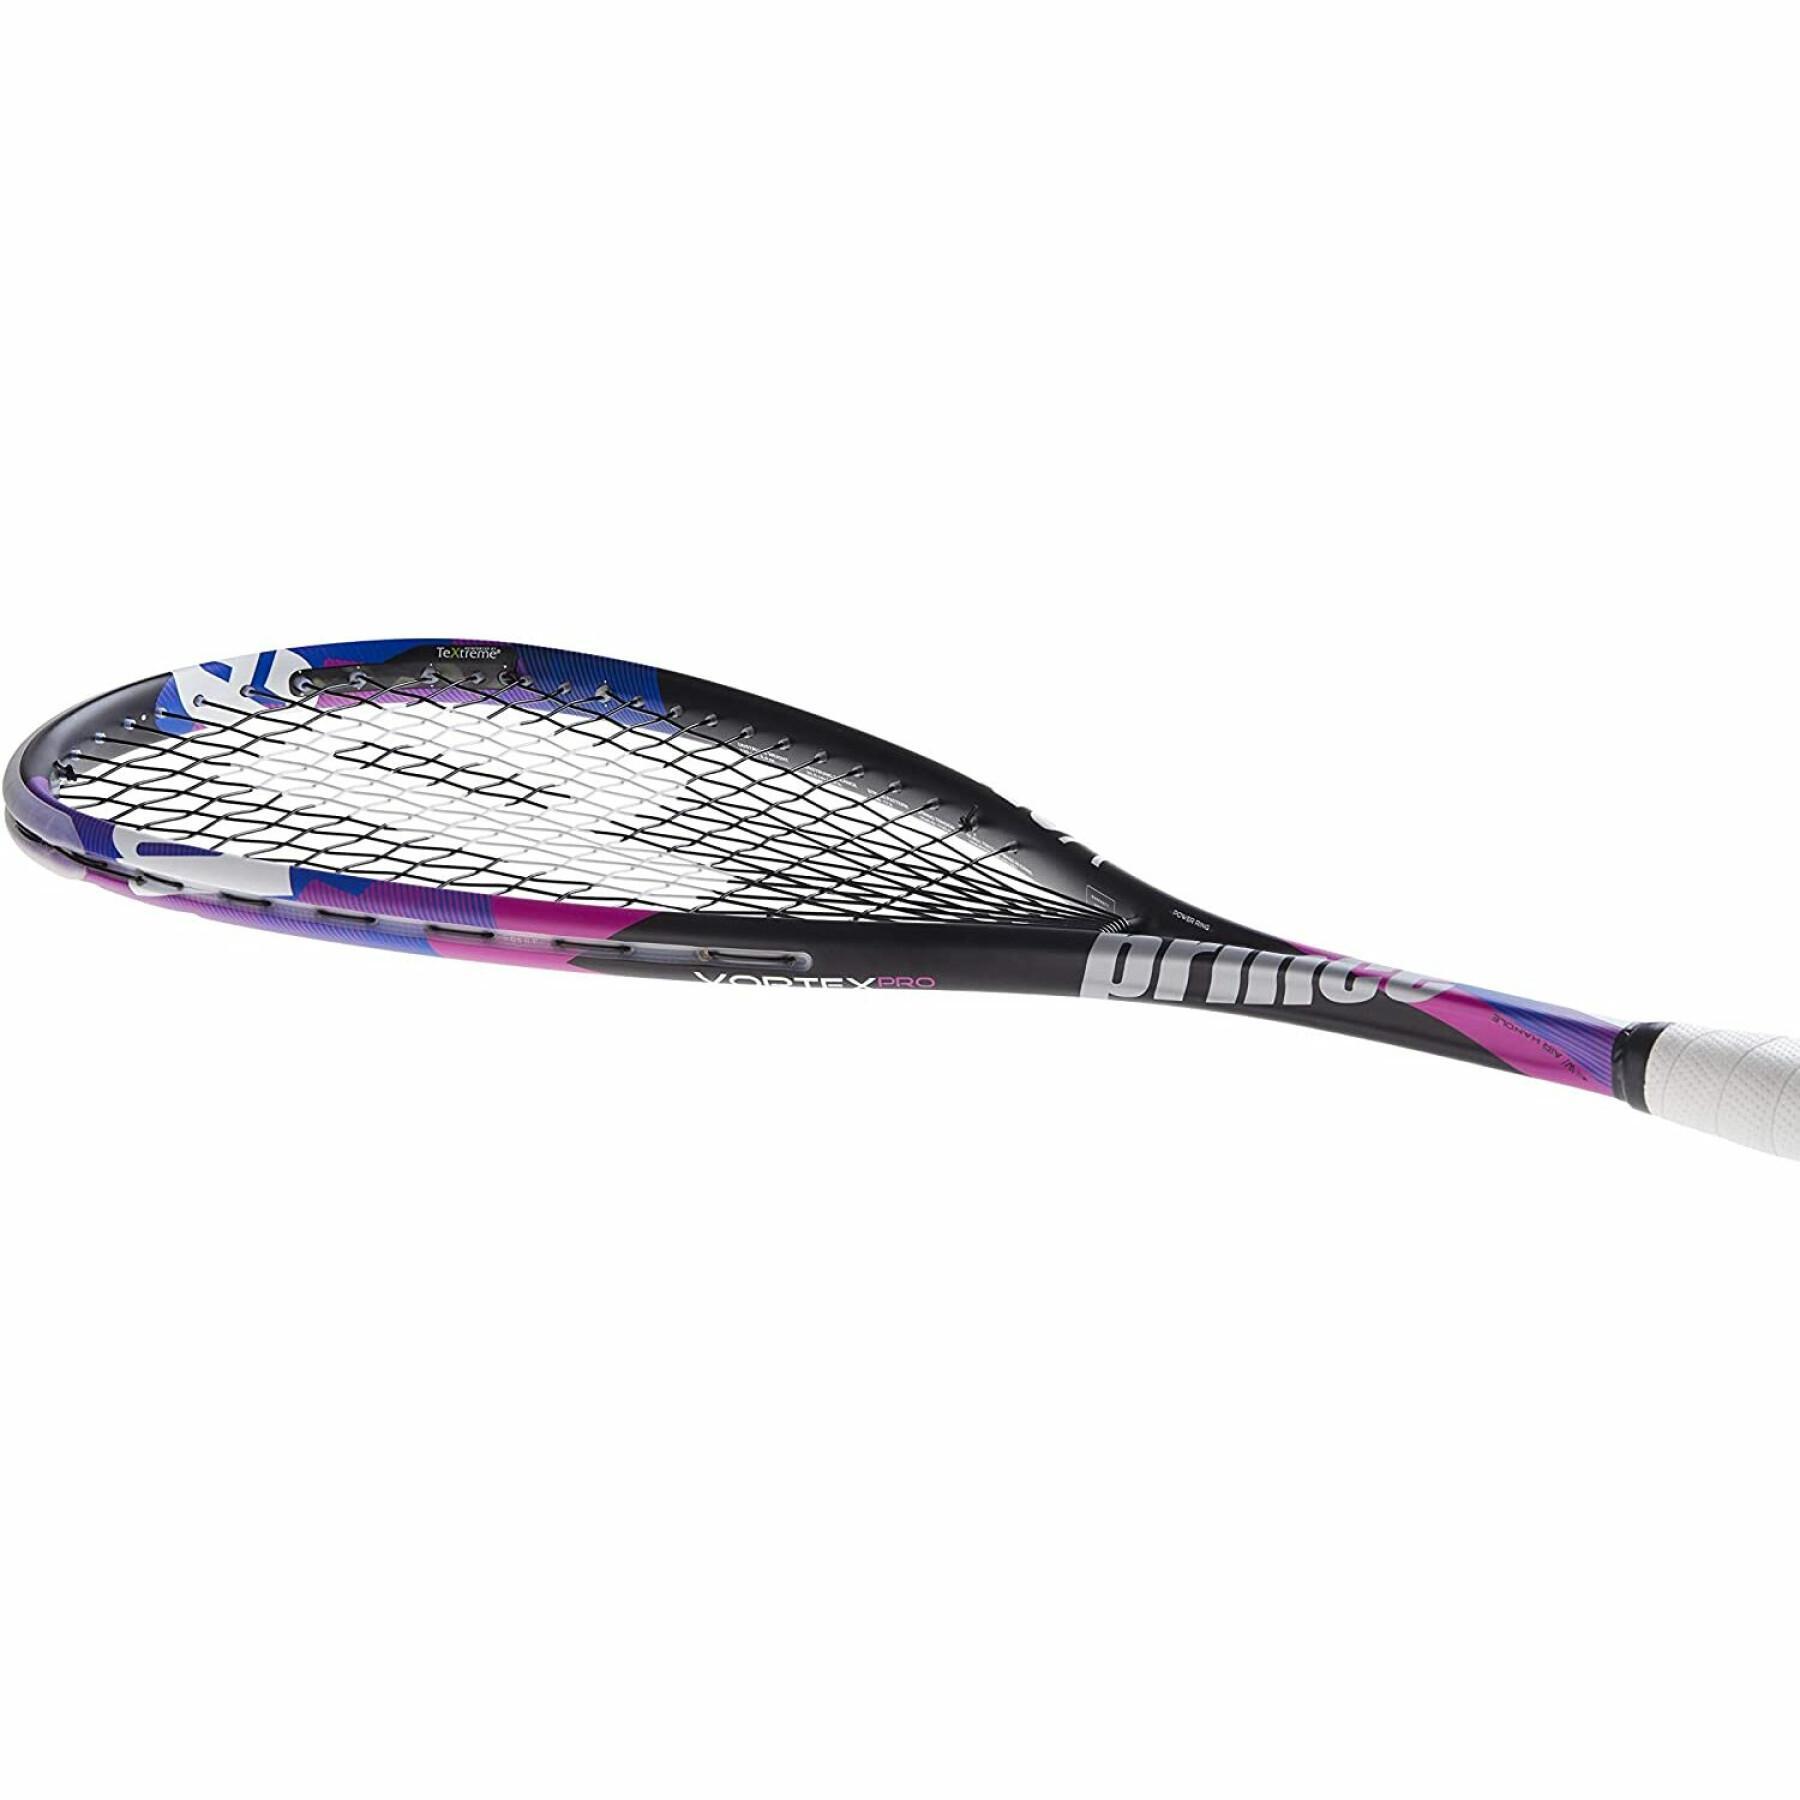 Squash racket Prince Vortex Pro